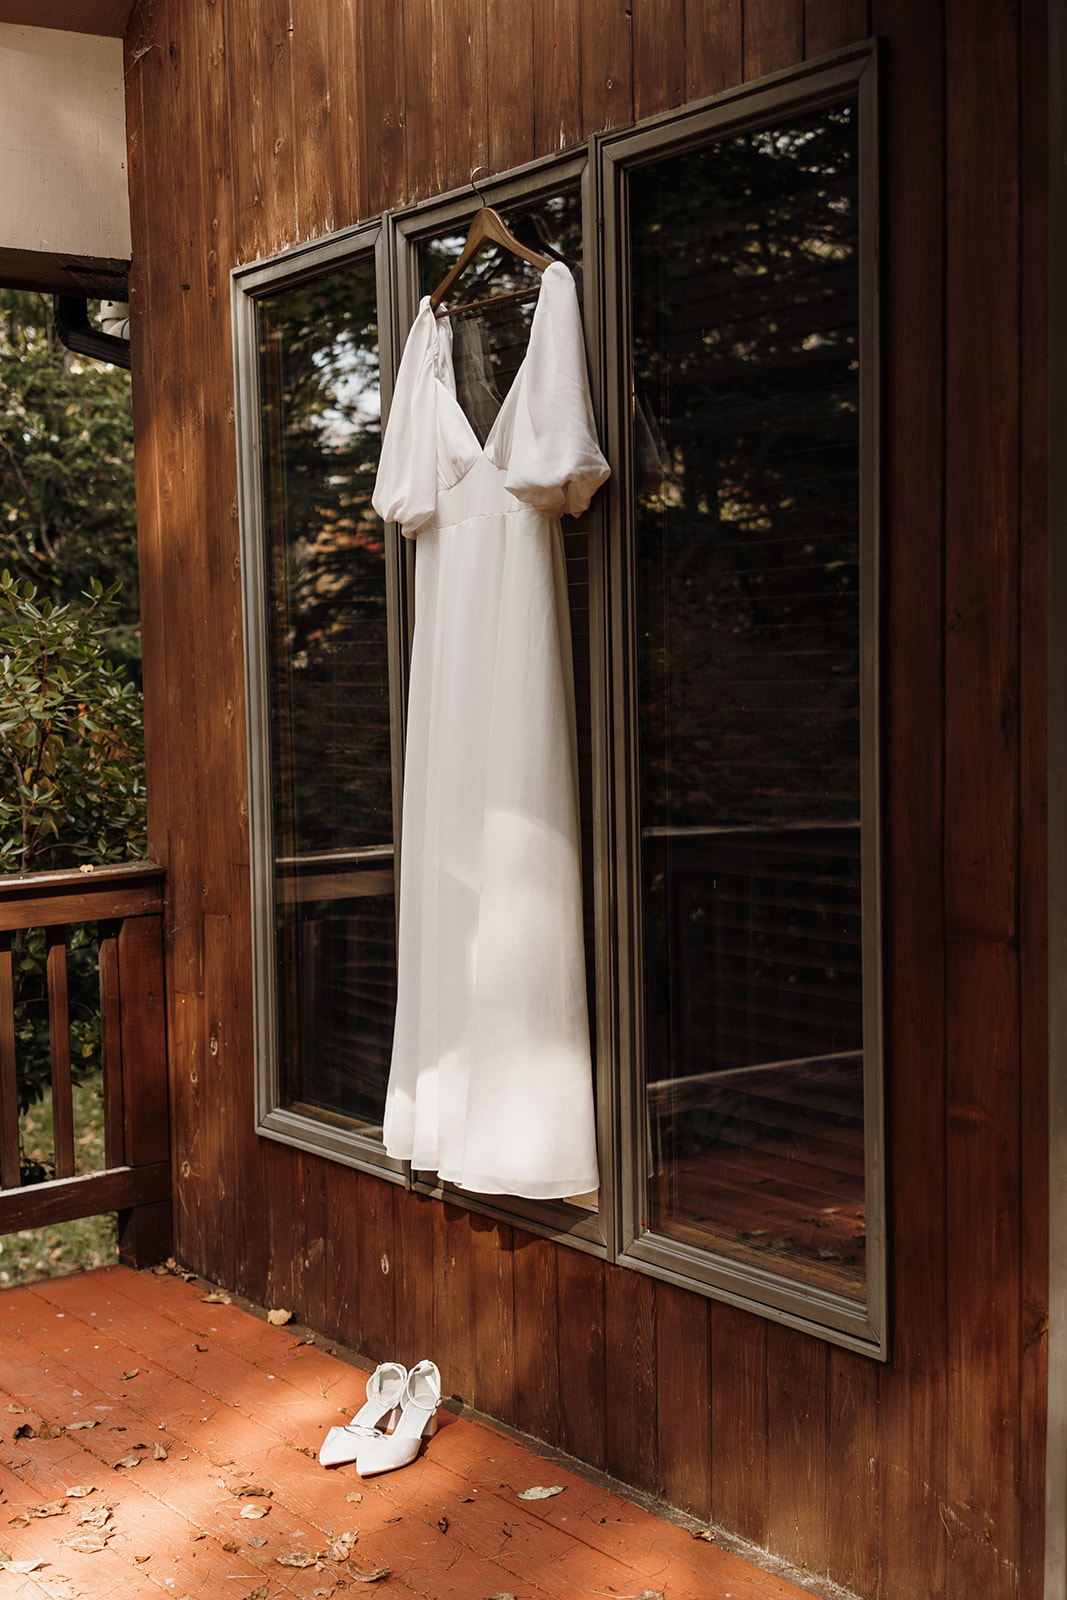 brides wedding dress hangs before her stunning Echo lake elopement